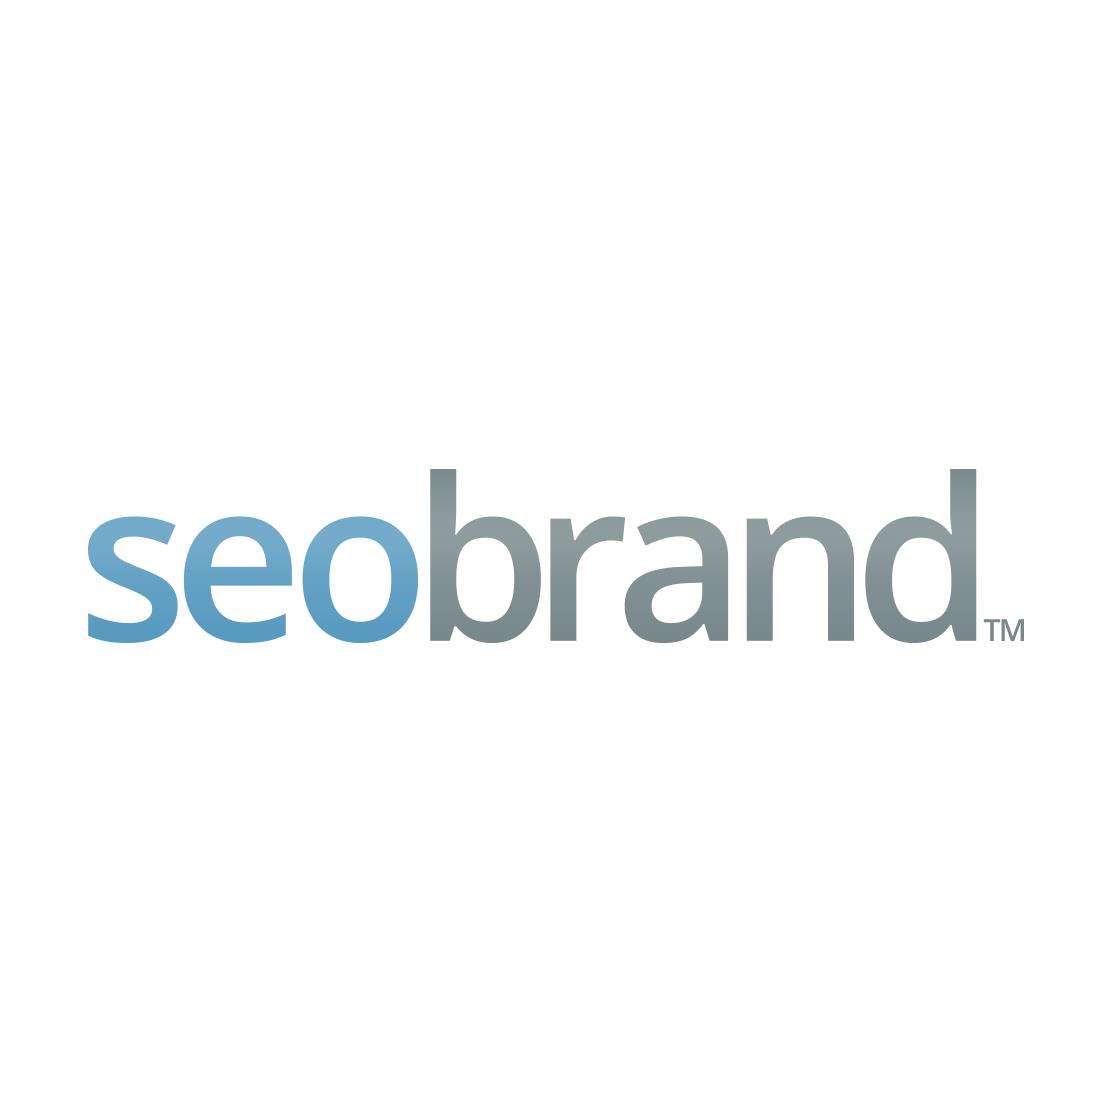 Best Boston SEO Company Logo: SEO Brand